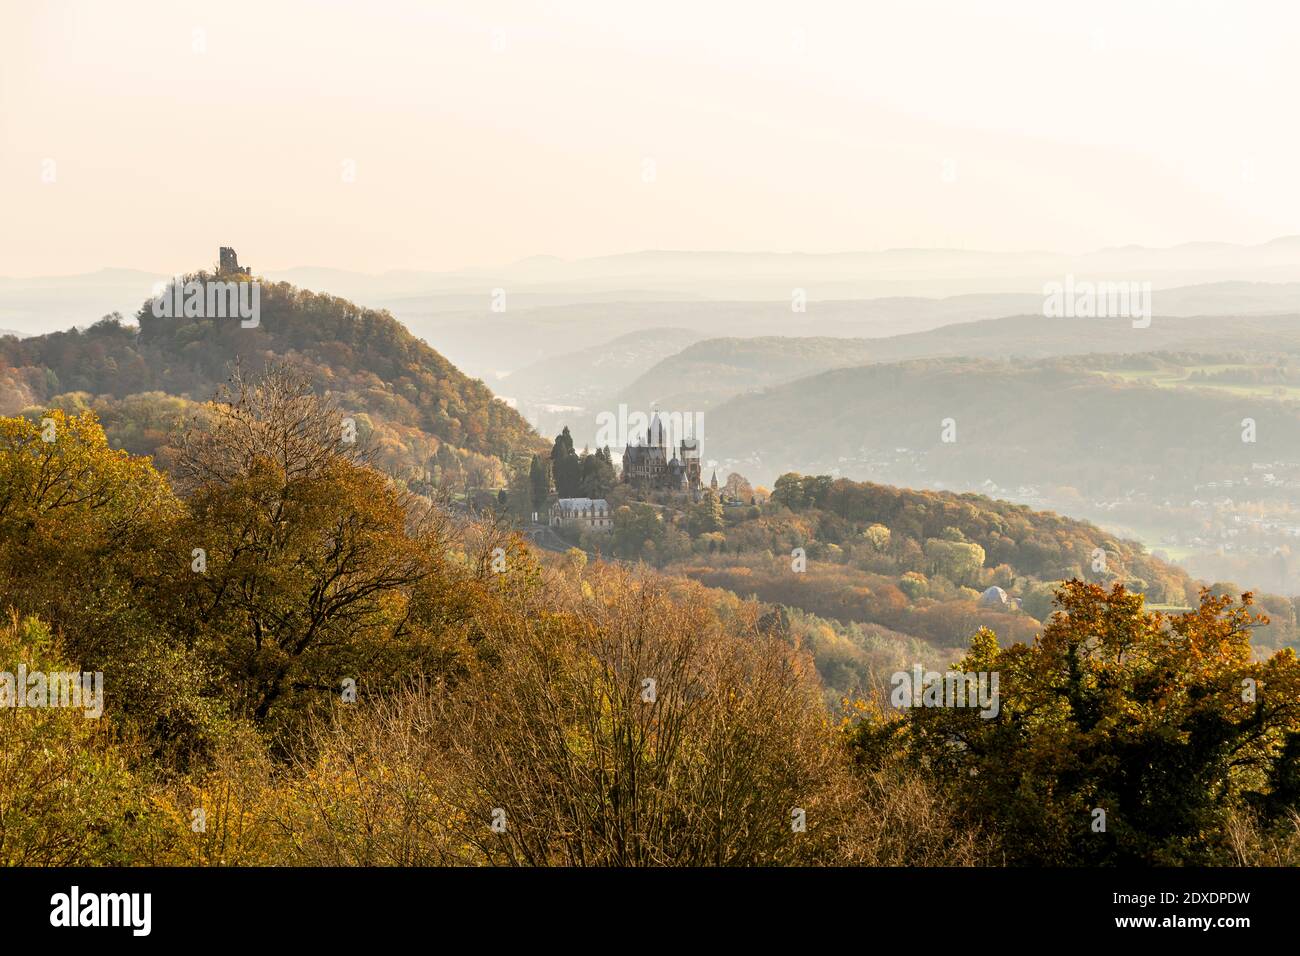 Germany, North Rhine-Westphalia, Konigswinter, Schloss Drachenburg in foggy autumn morning Stock Photo